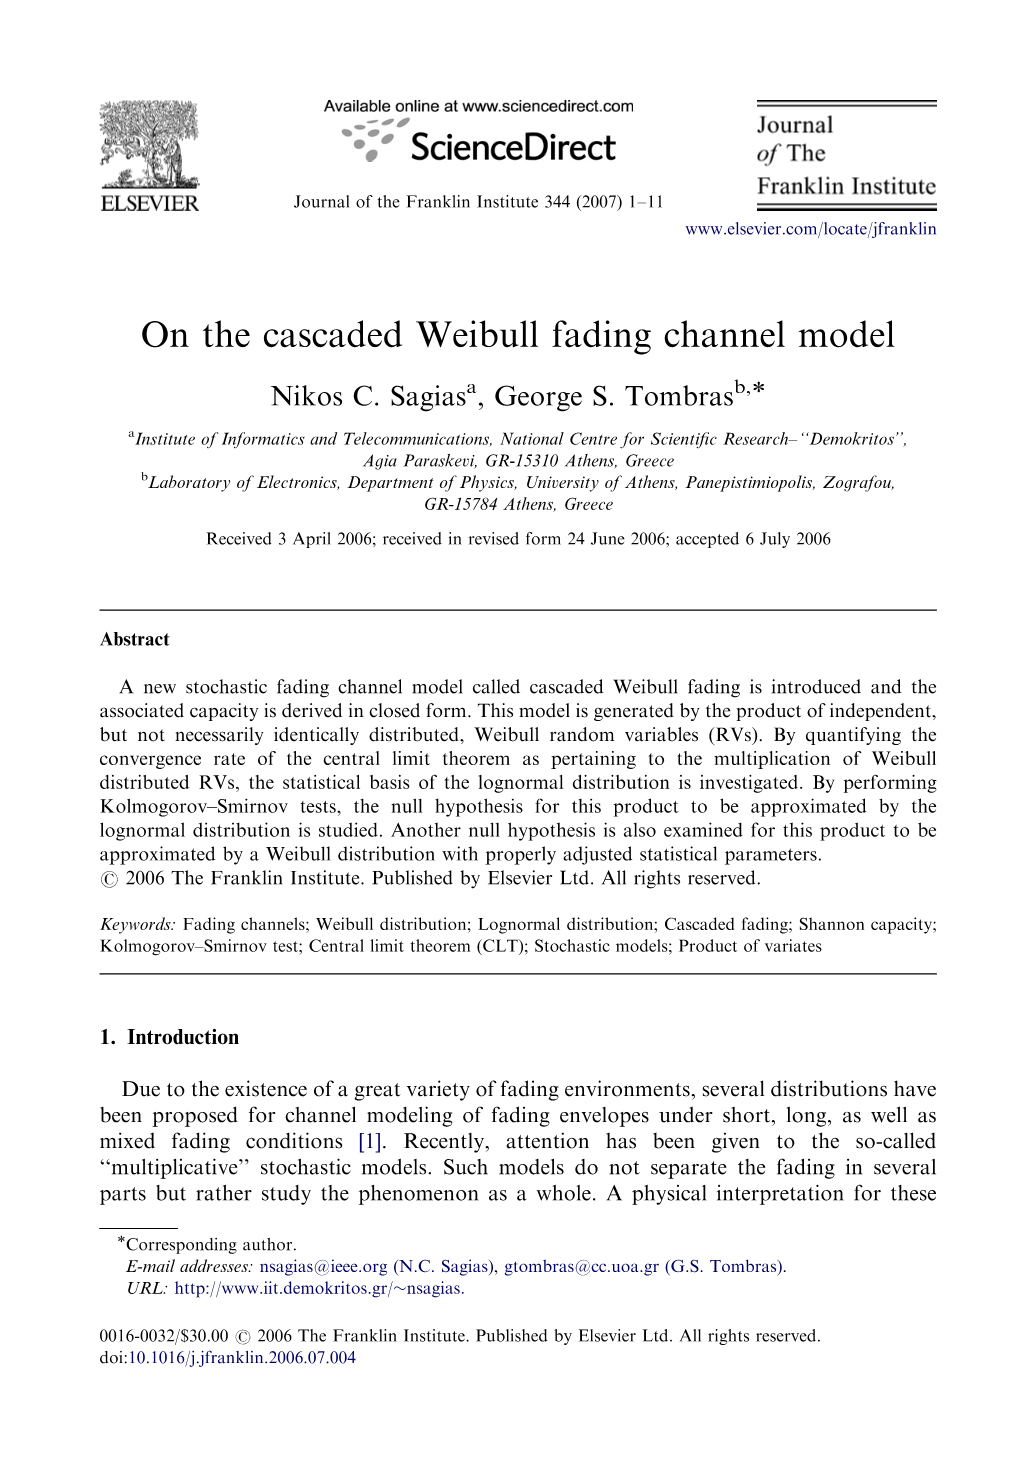 On the Cascaded Weibull Fading Channel Model